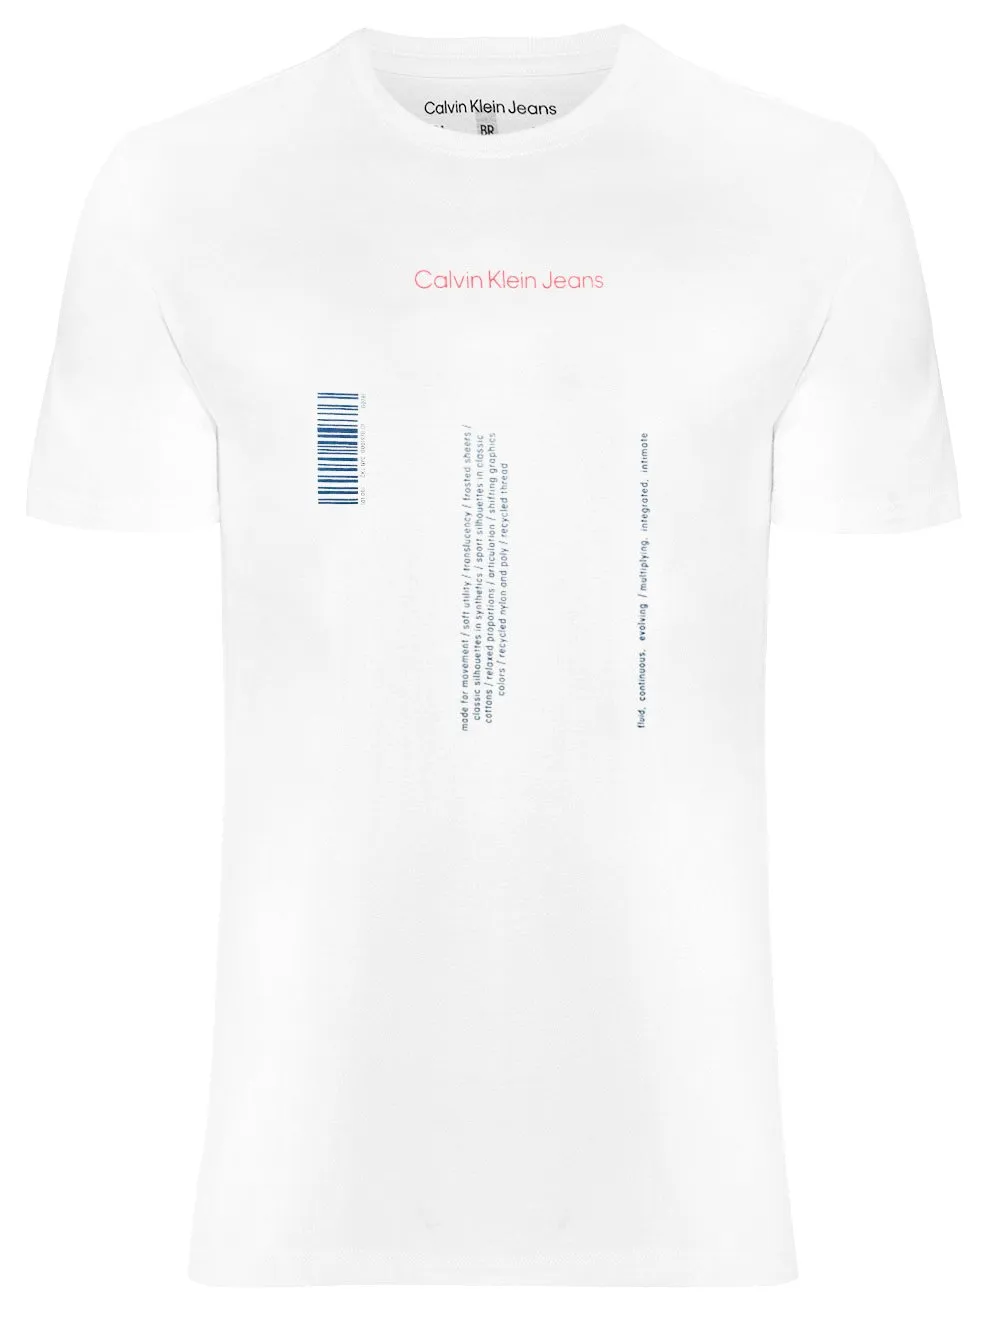 Camiseta Calvin Klein Jeans Barcode Made For Movement Branca | Secret Outlet